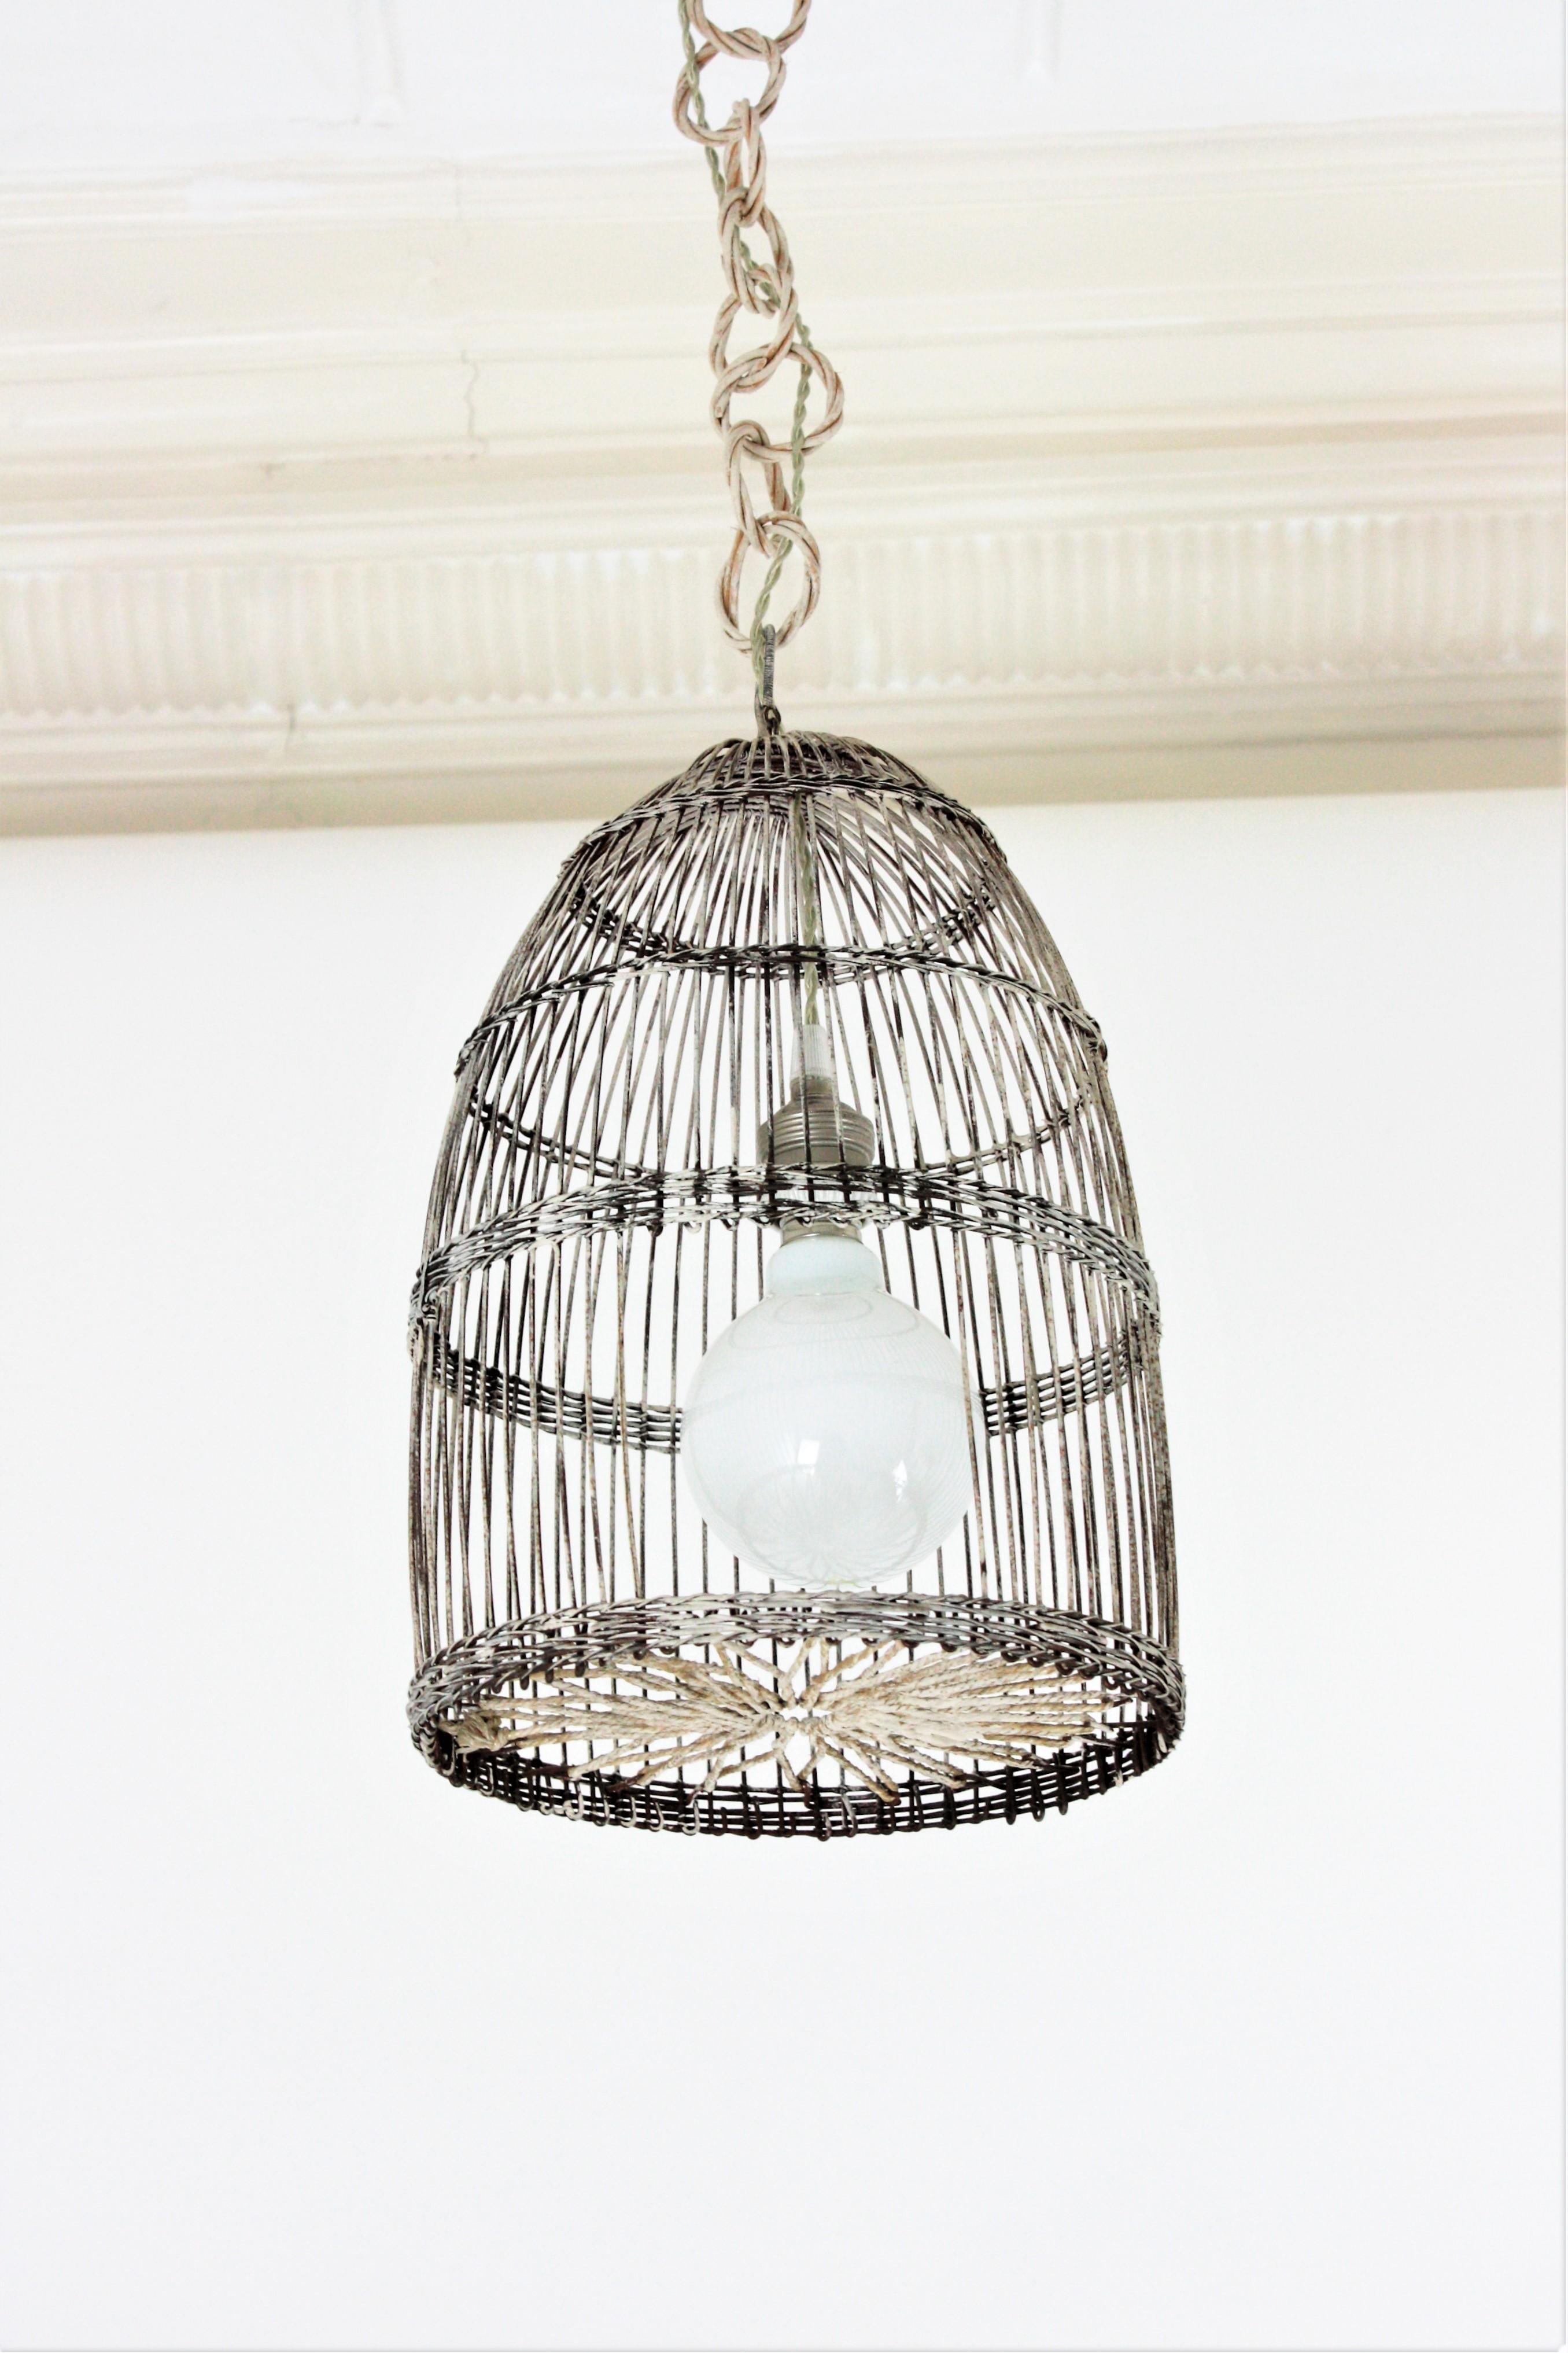 Birdcage Rustic Hanging Light Pendant Lamp 5